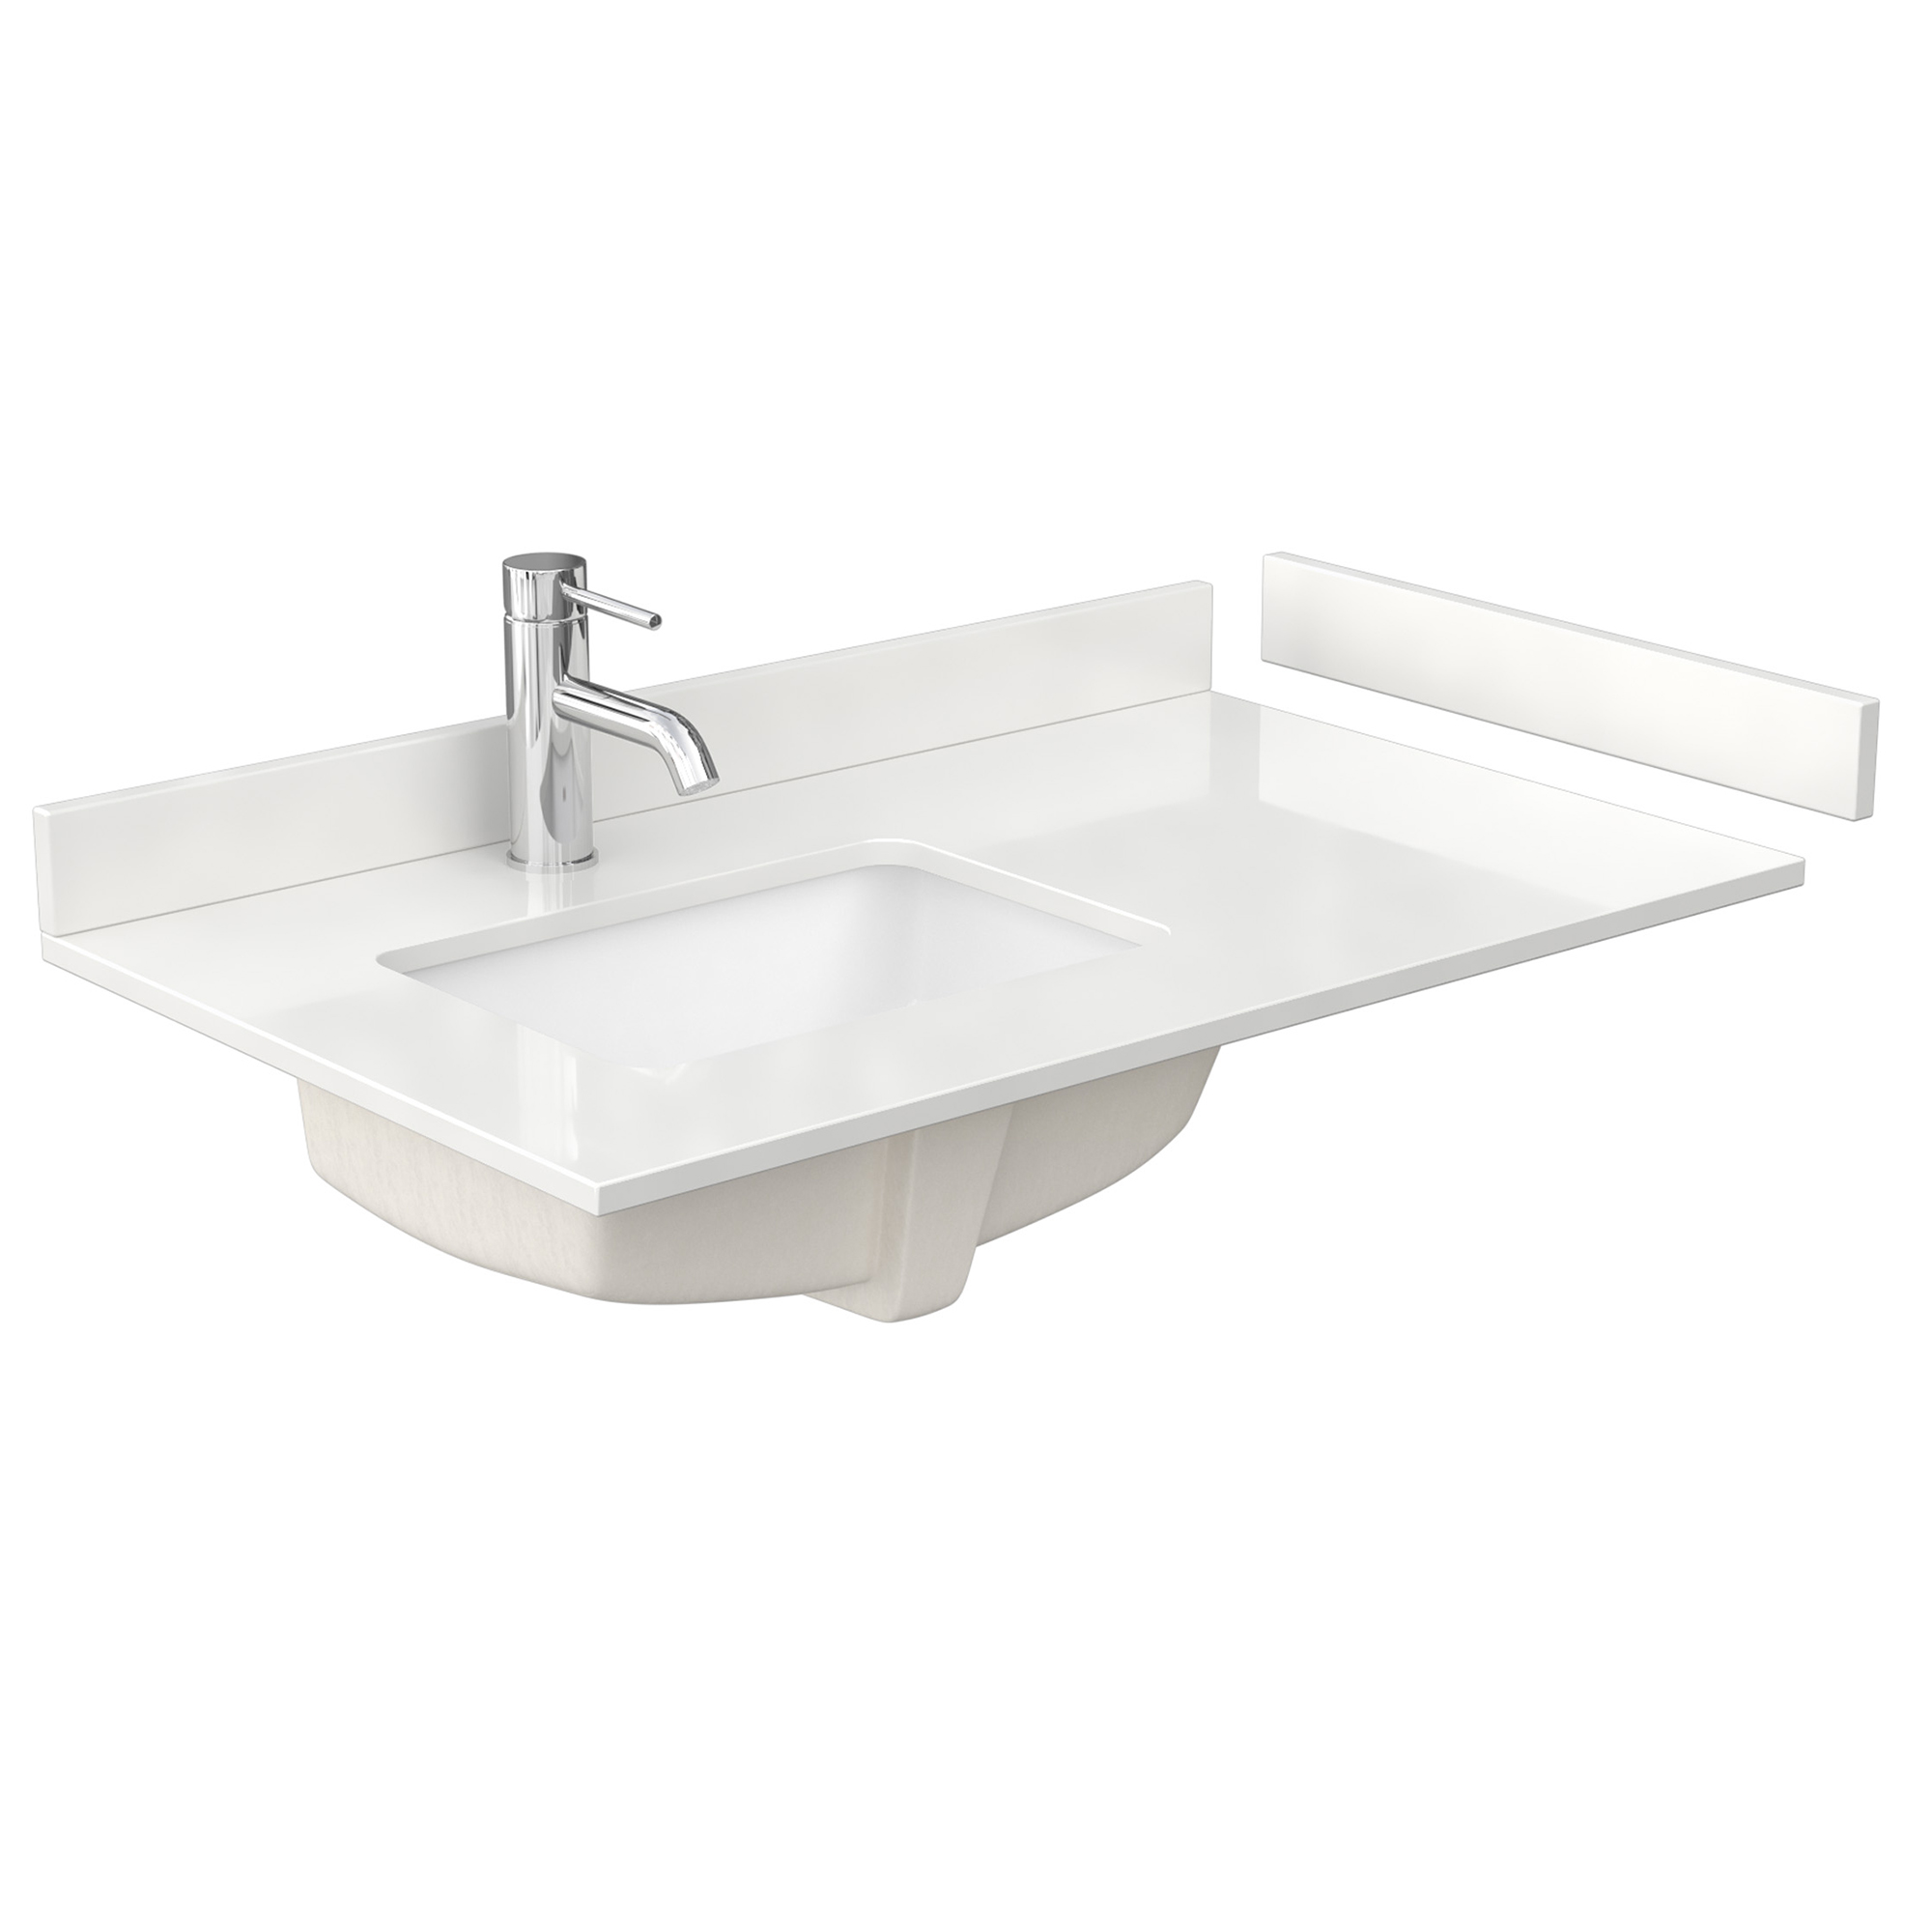 36" single countertop - white quartz (1000) with undermount square sink (1-hole), offset to left - includes backsplash and sidesplash